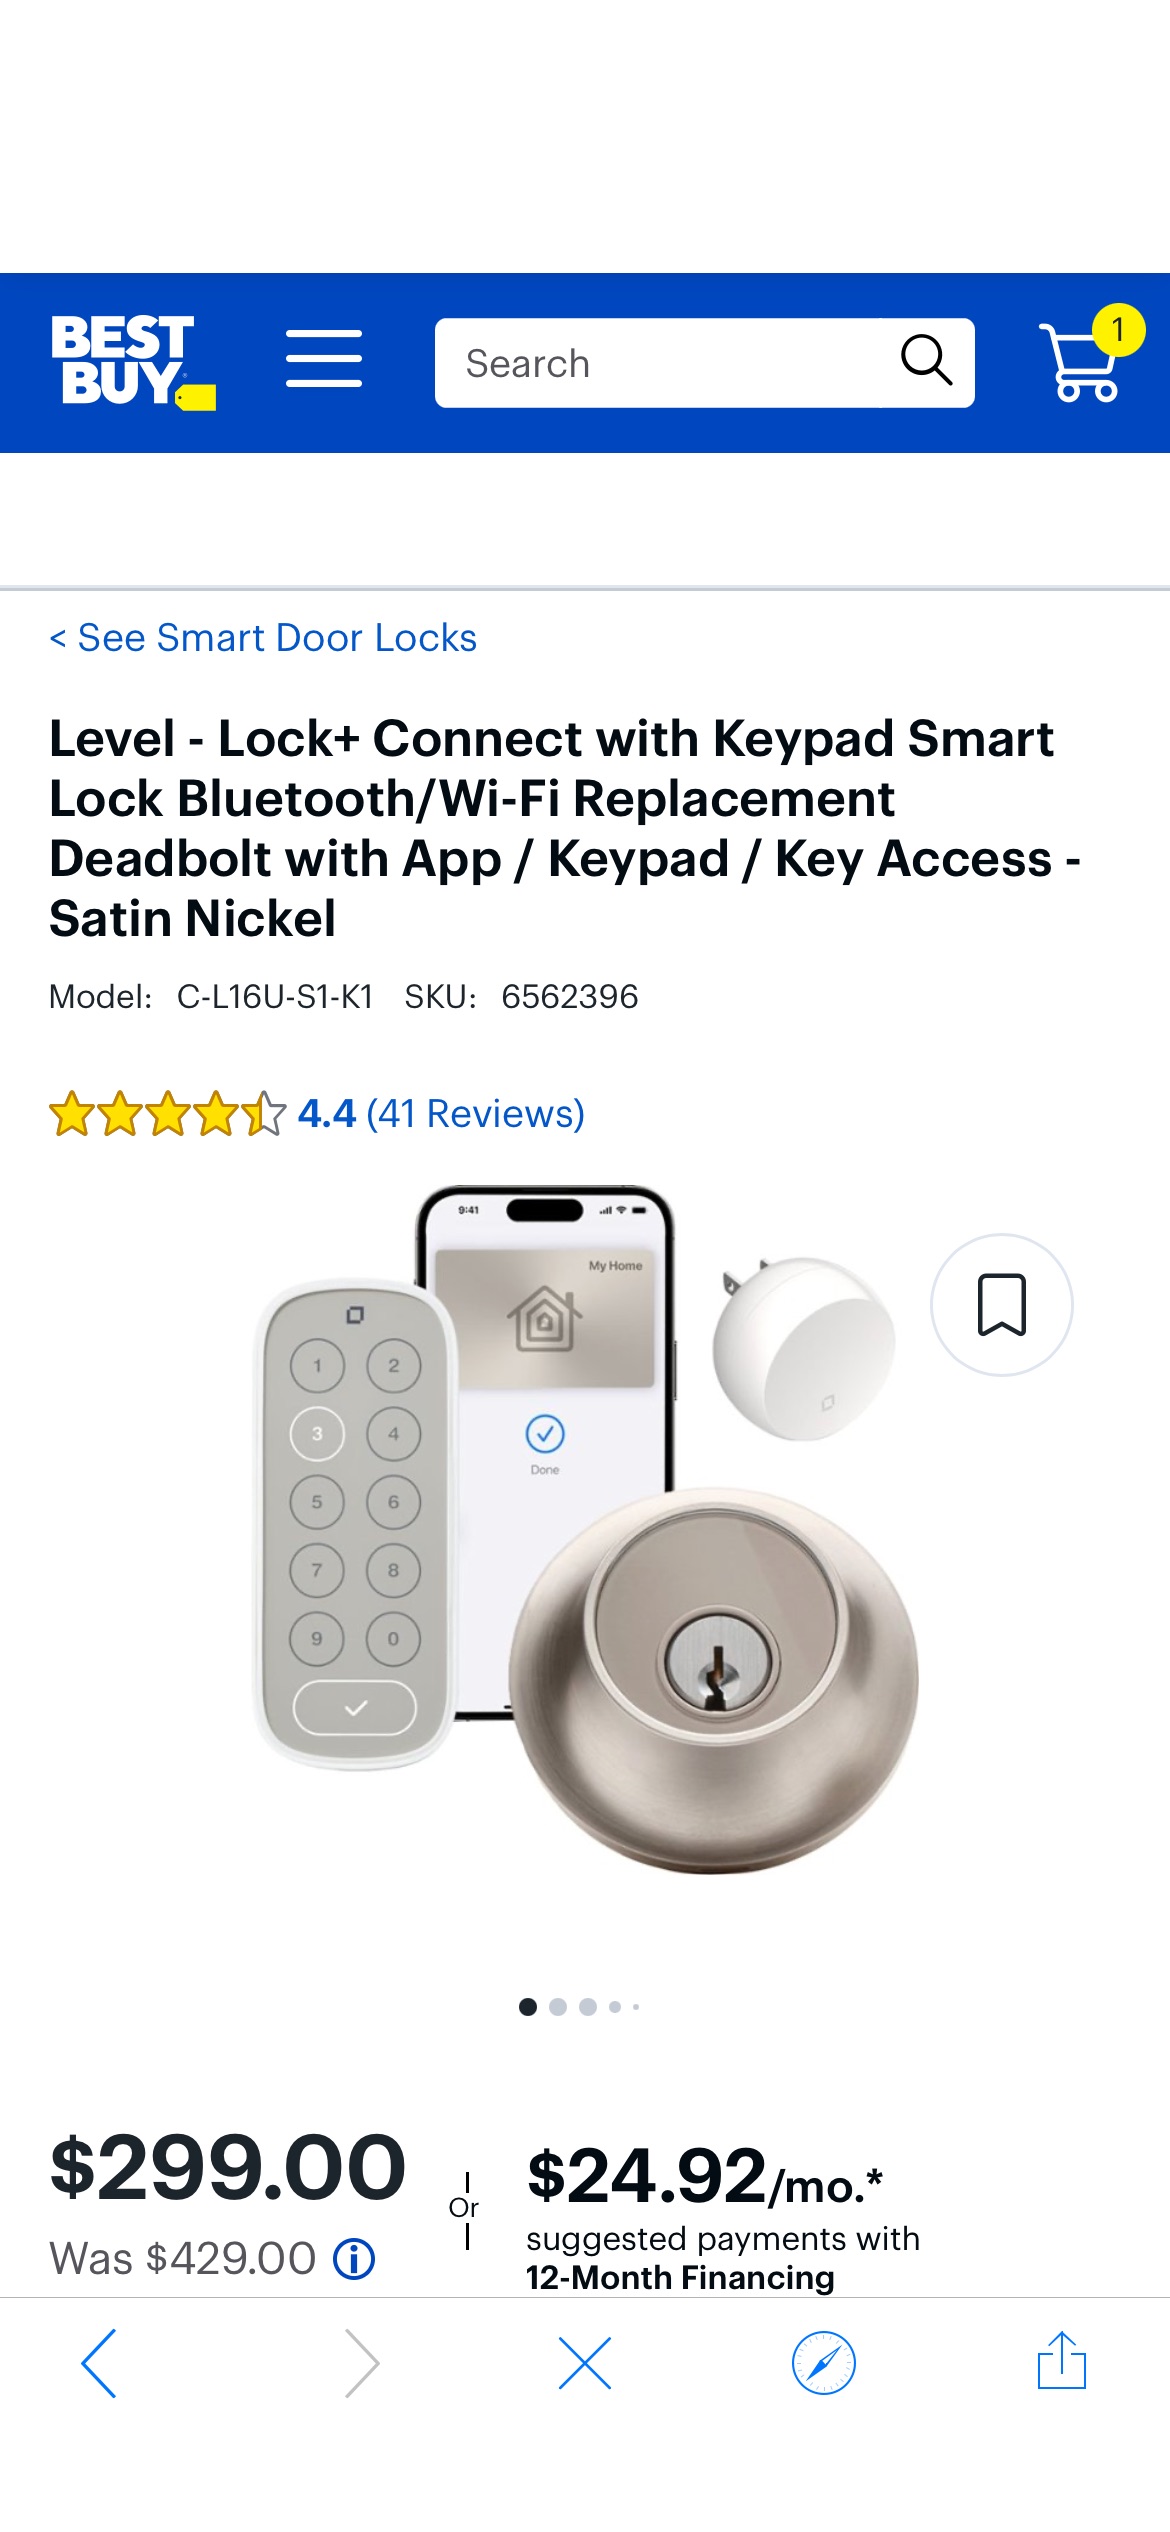 Level Lock+ Connect with Keypad Smart Lock Bluetooth/Wi-Fi Replacement Deadbolt with App / Keypad / Key Access Satin Nickel C-L16U-S1-K1 - Best Buy